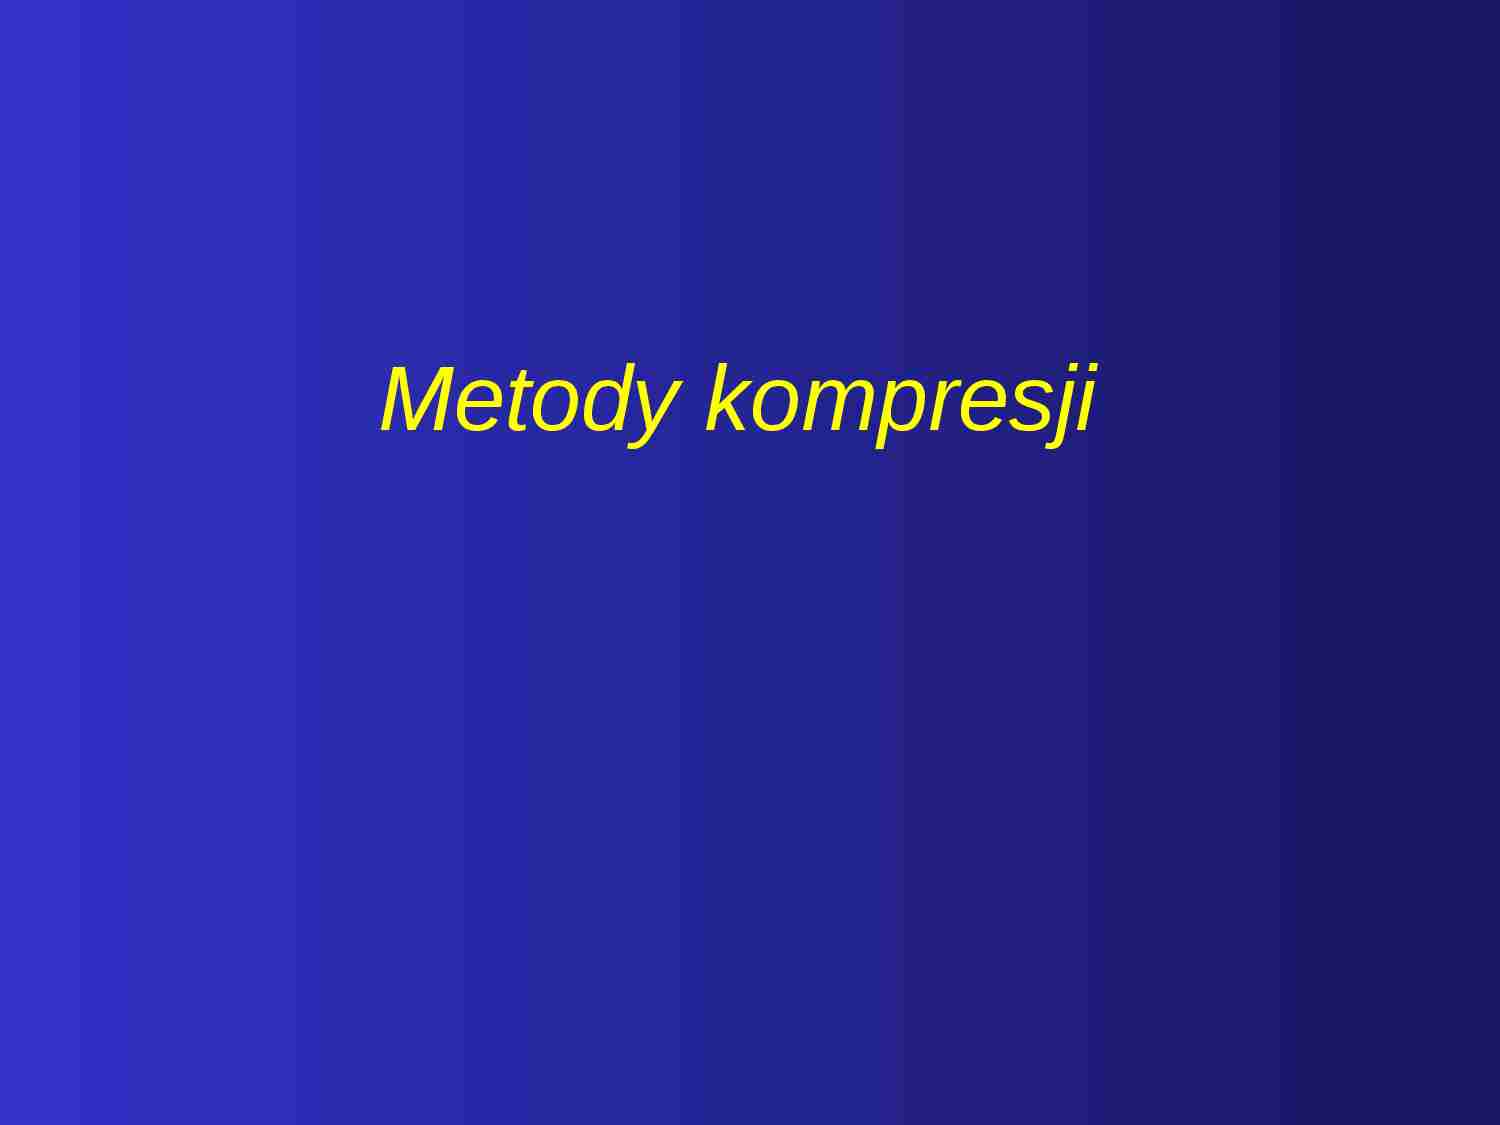 Metody kompresji - musicam - strona 1